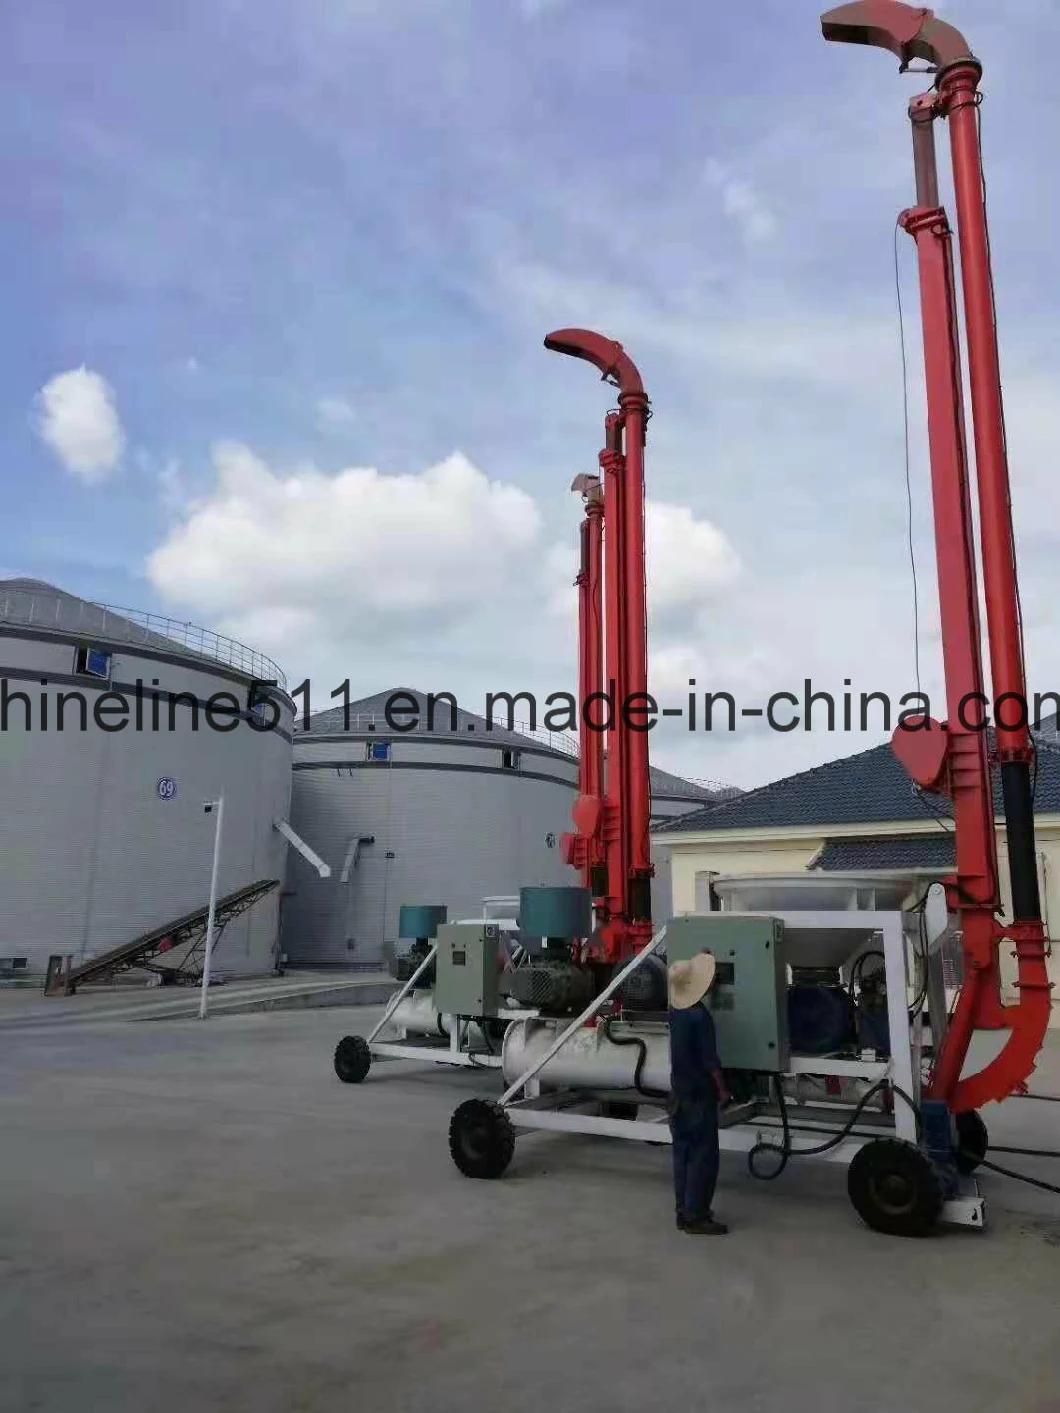 New Carbon Steel Xiangliang Brand Gran Pump Mobile Grain Unloader